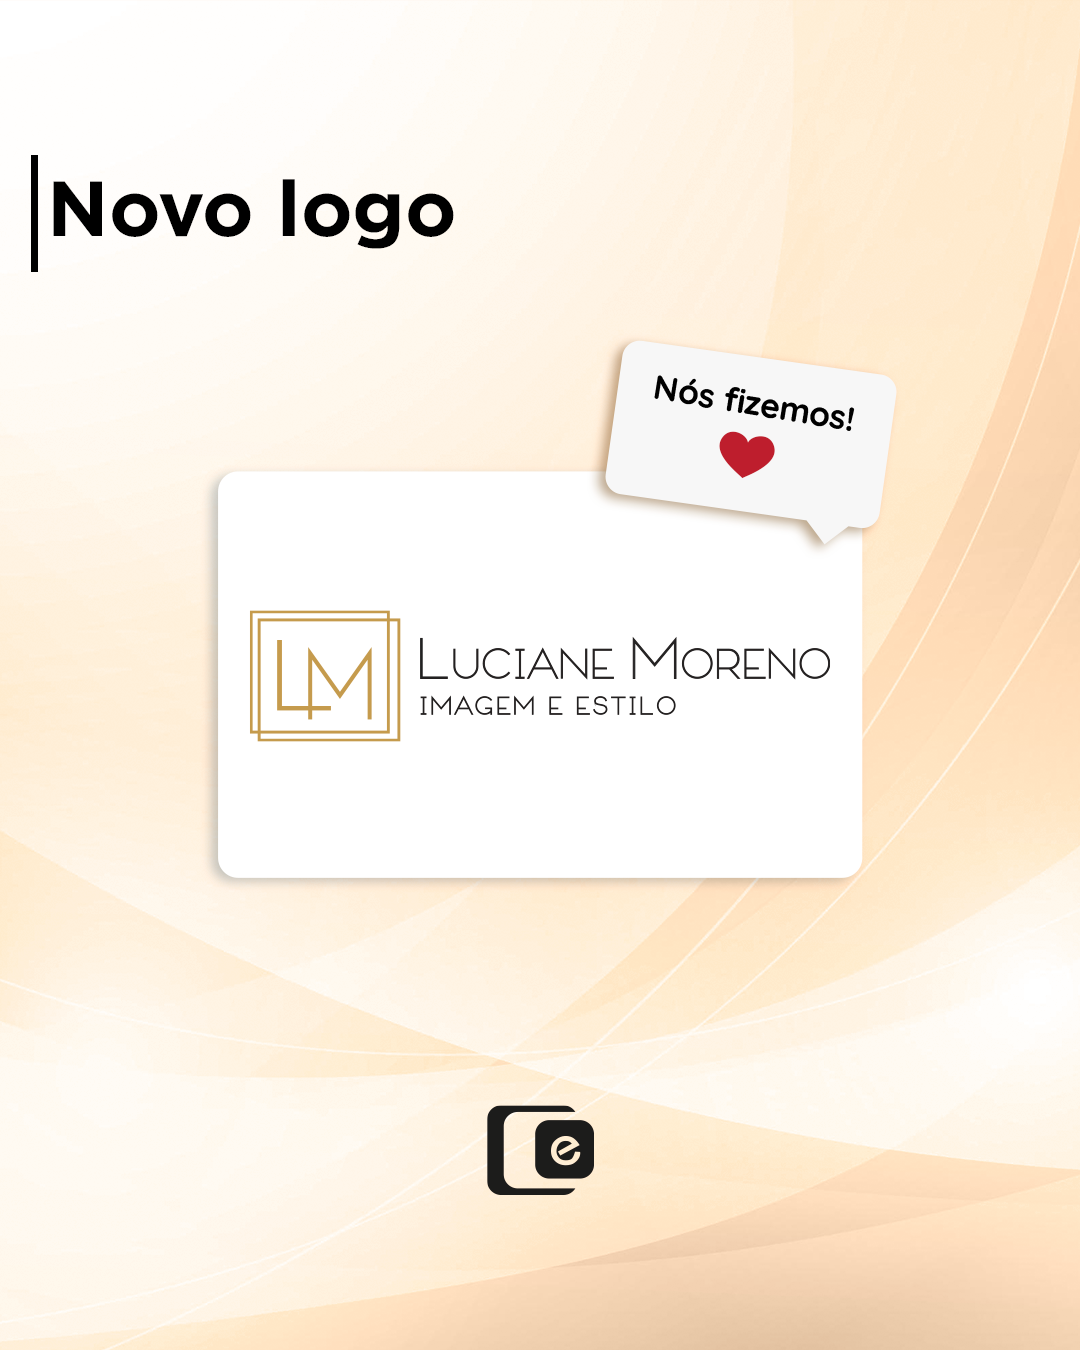 Nova logo para a Luciane Moreno!